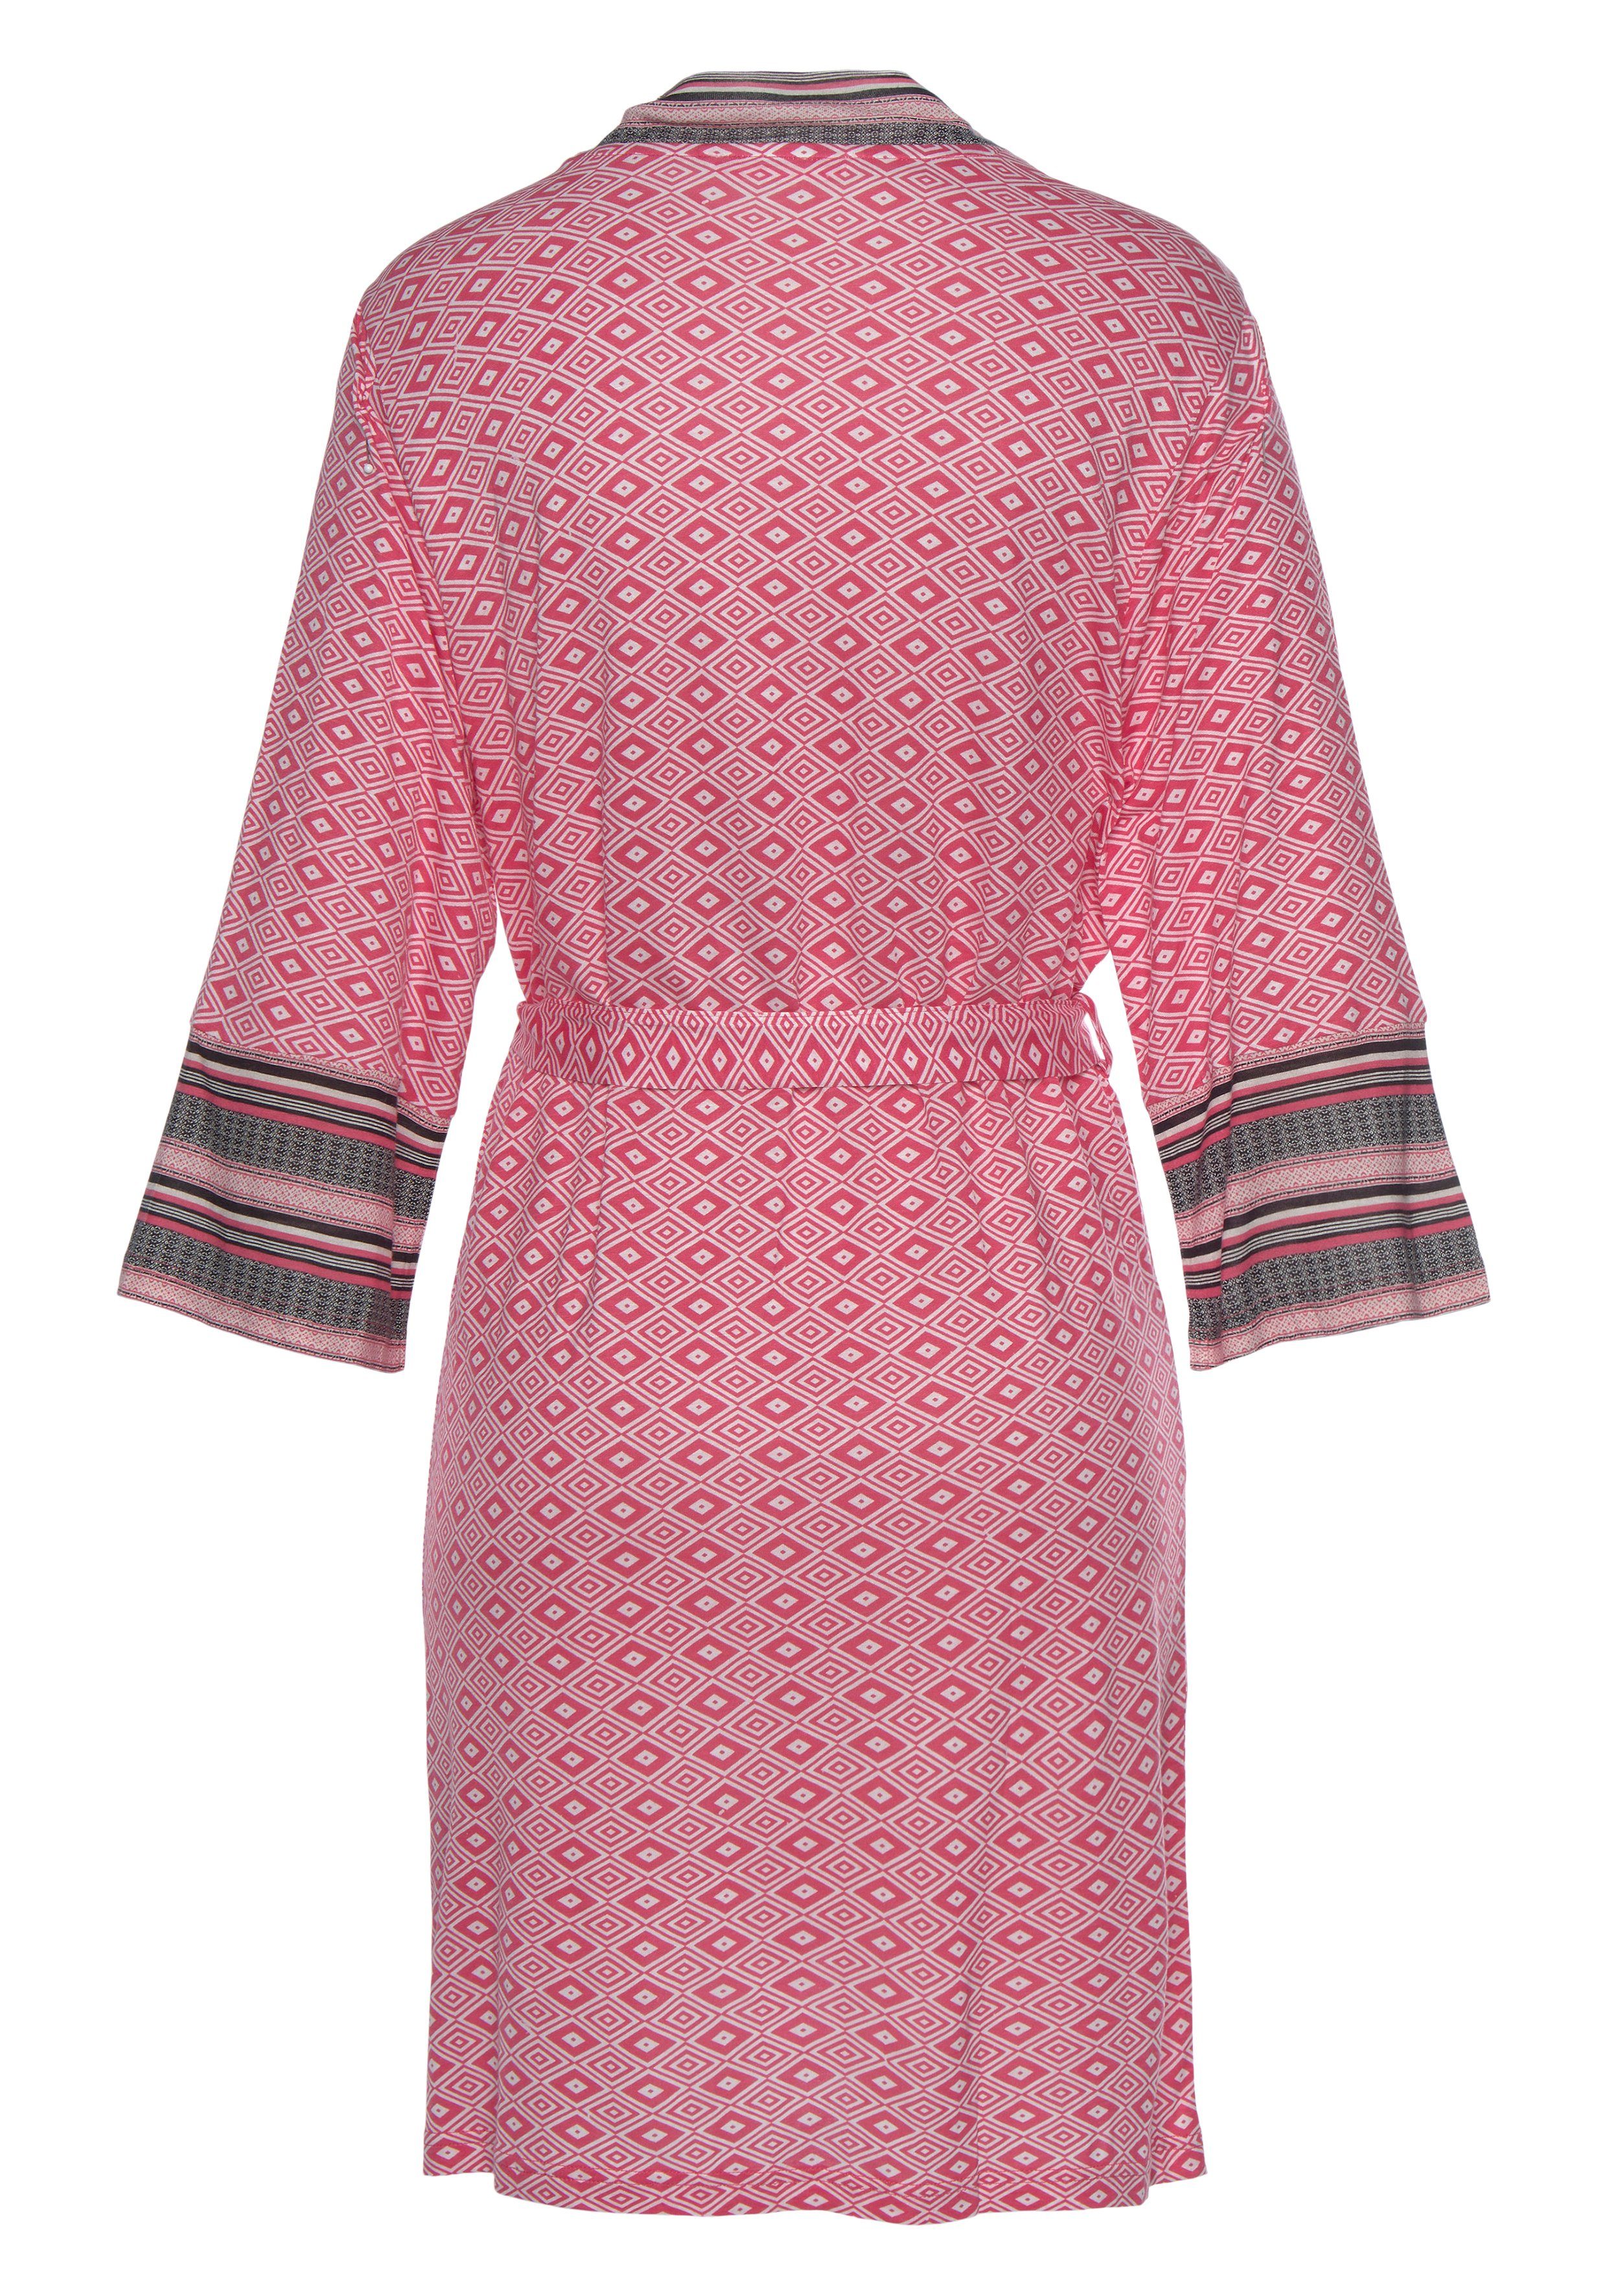 Vivance Dreams Kimono-Kragen, Gürtel, Kurzform, Kimono, gemustert Single-Jersey, pink Ethno-Design in schönem